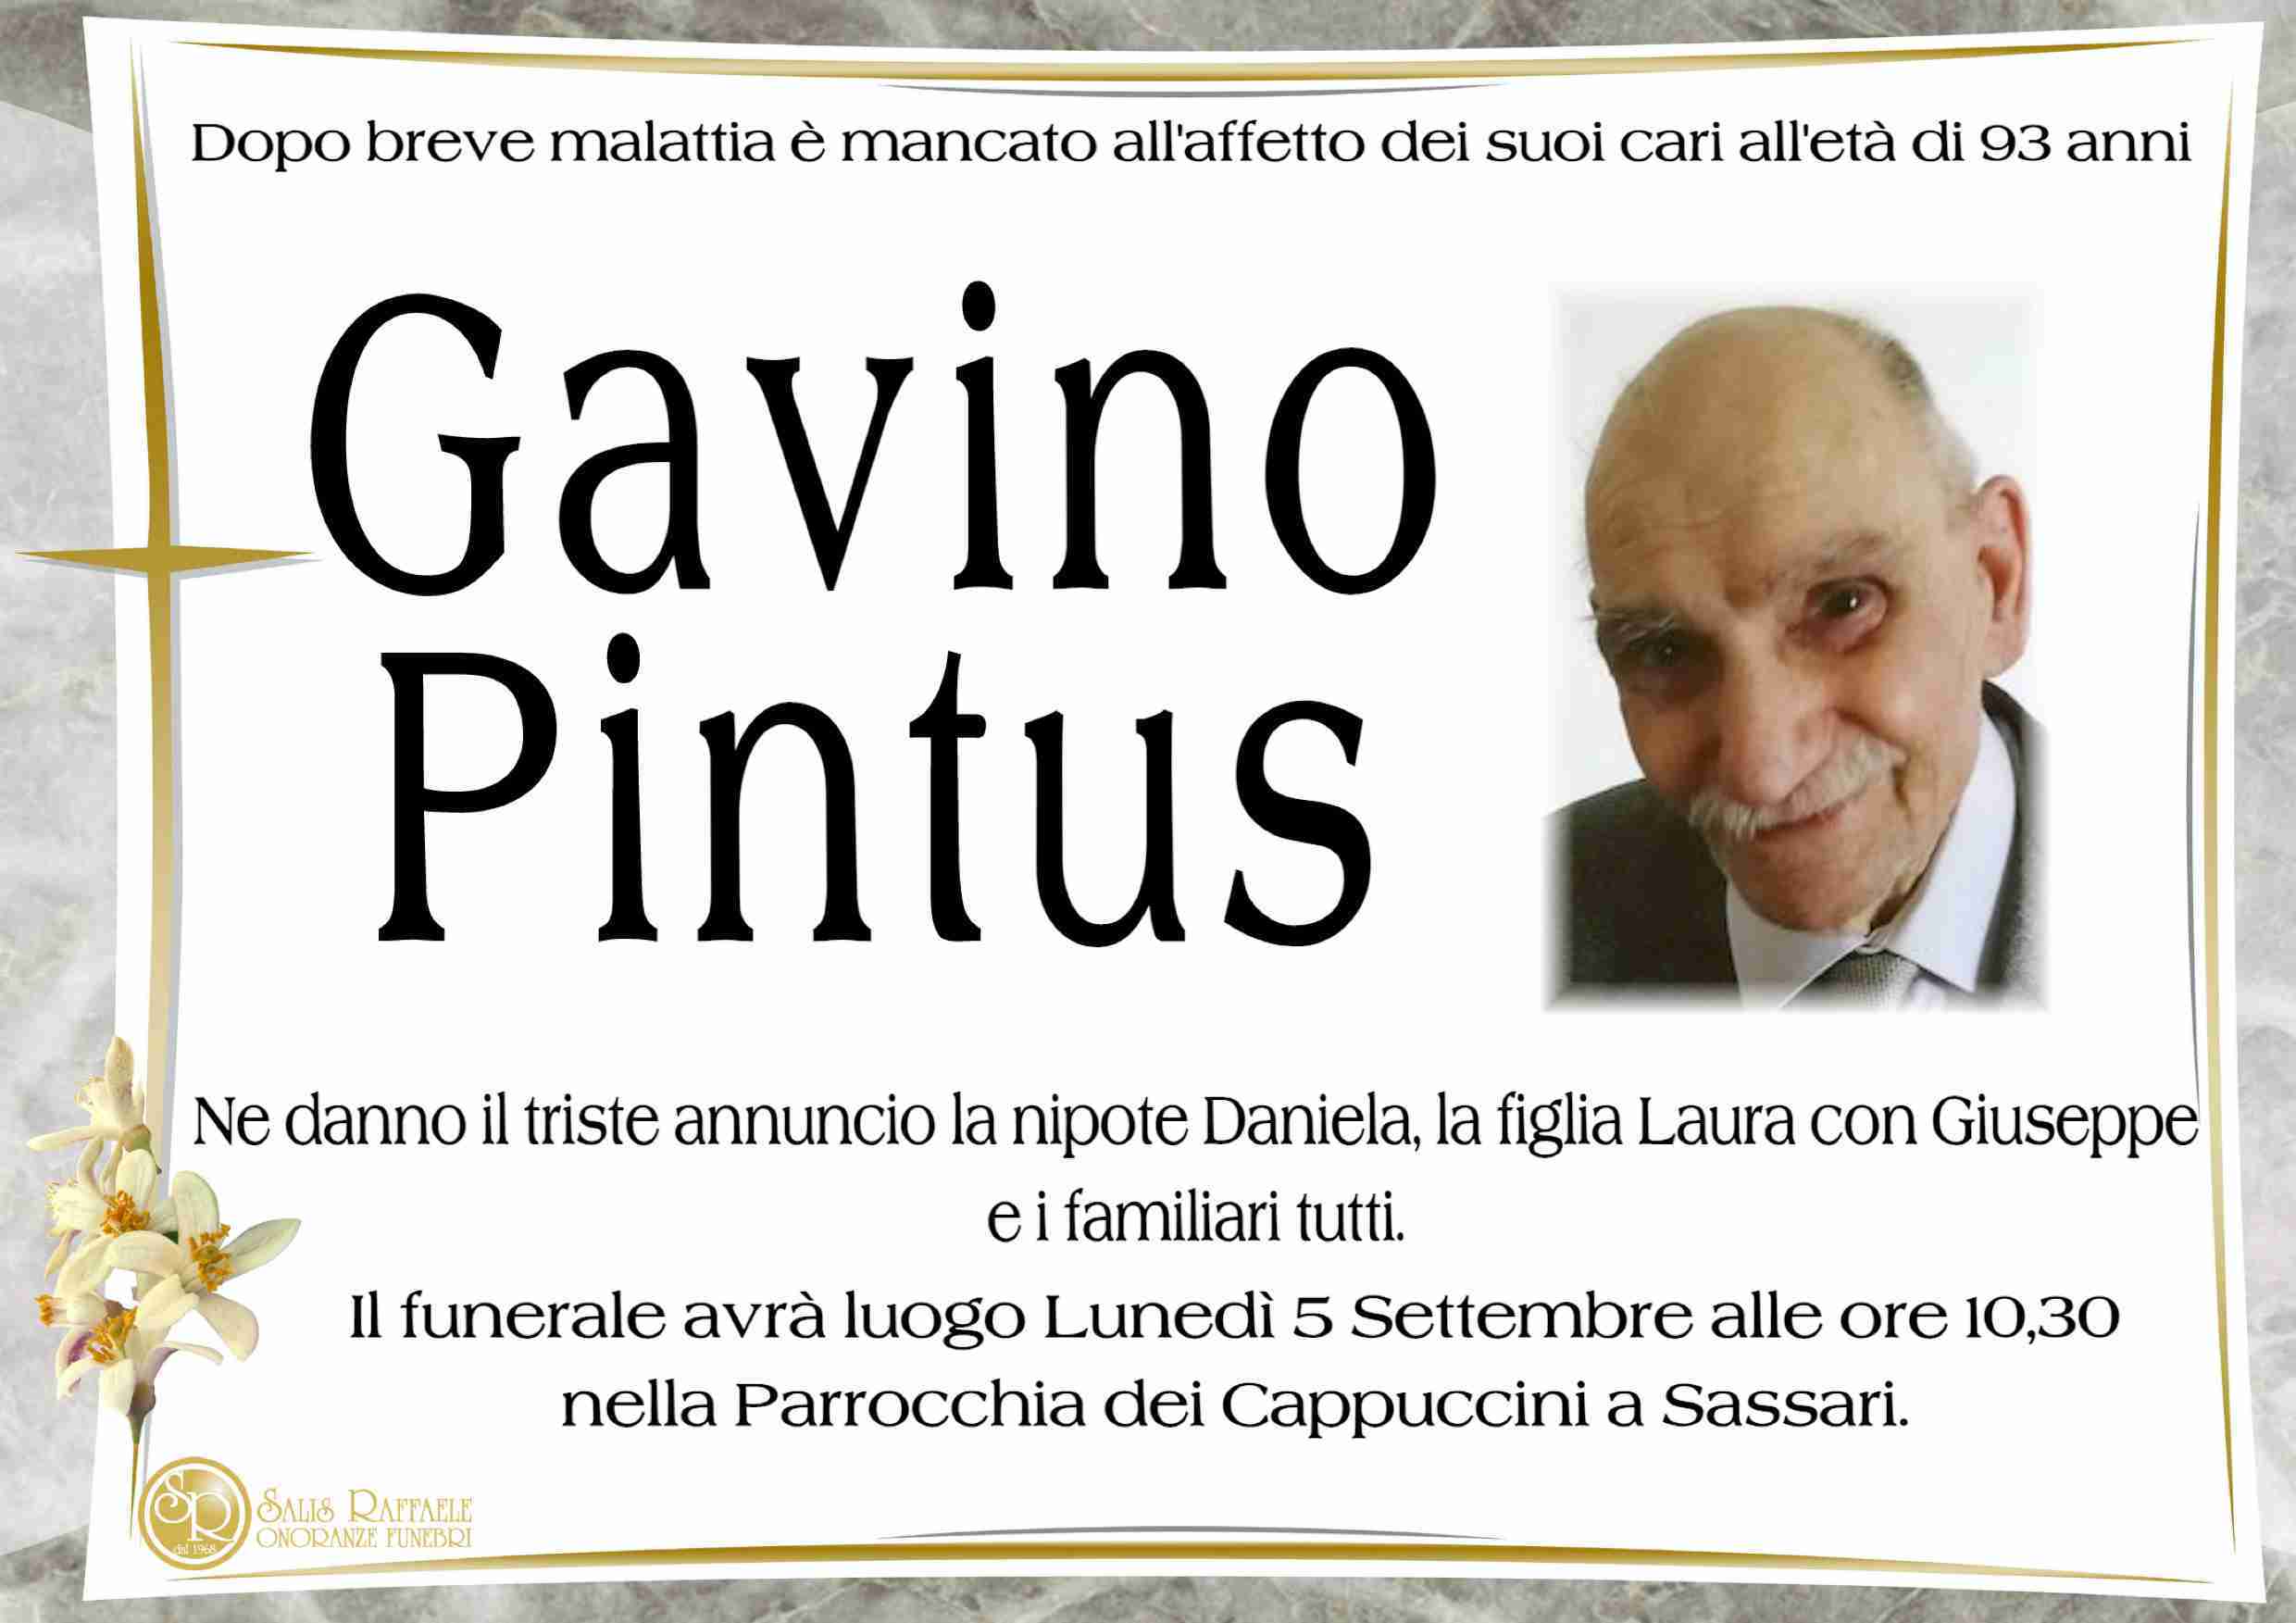 Gavino Pintus